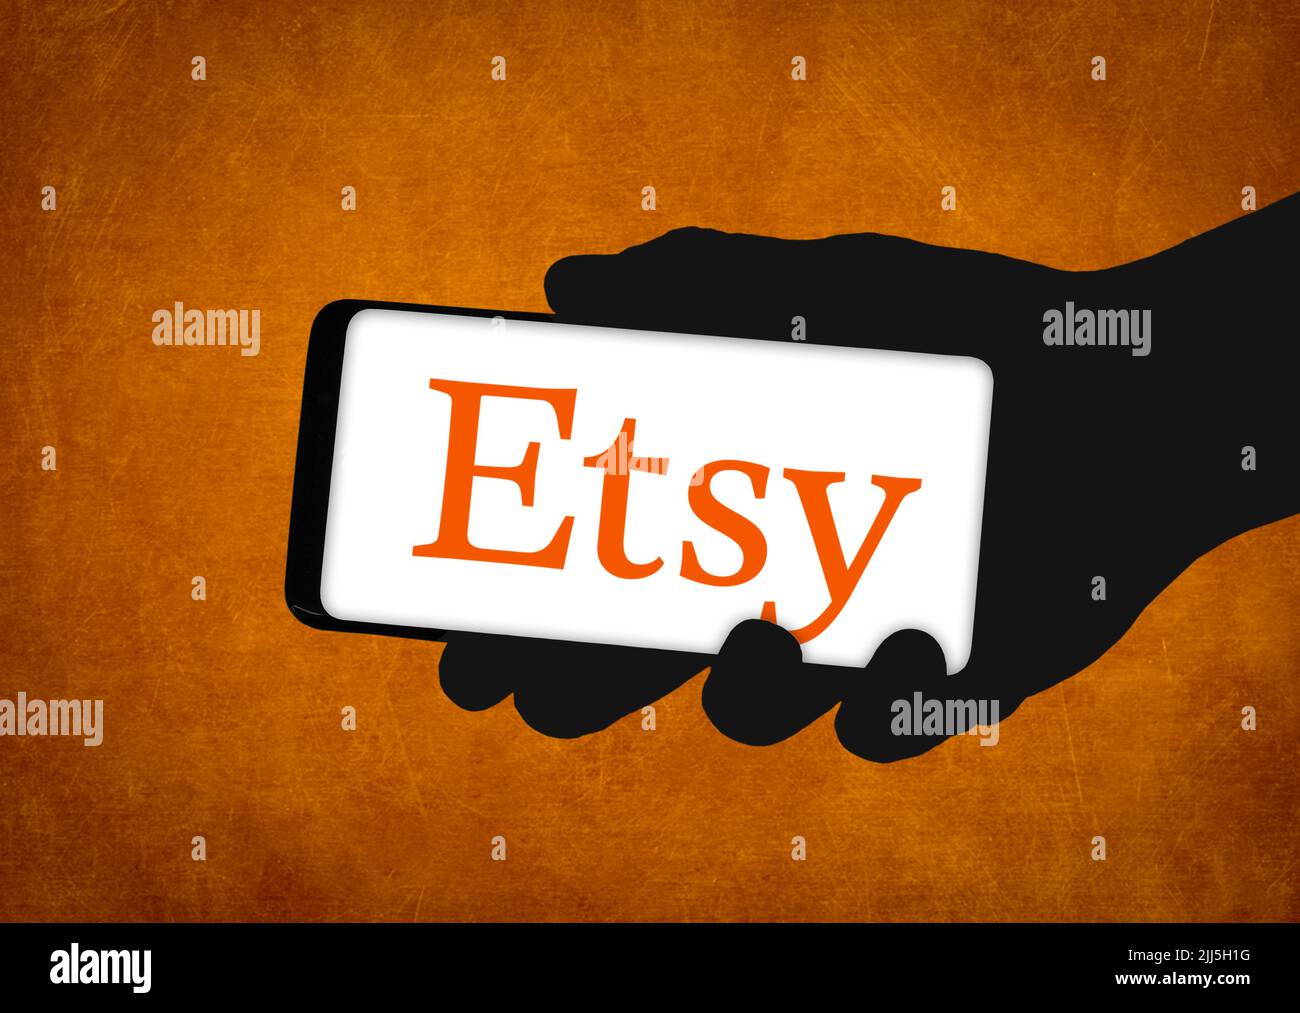 Etsy company logo on mobile device Stock Photo